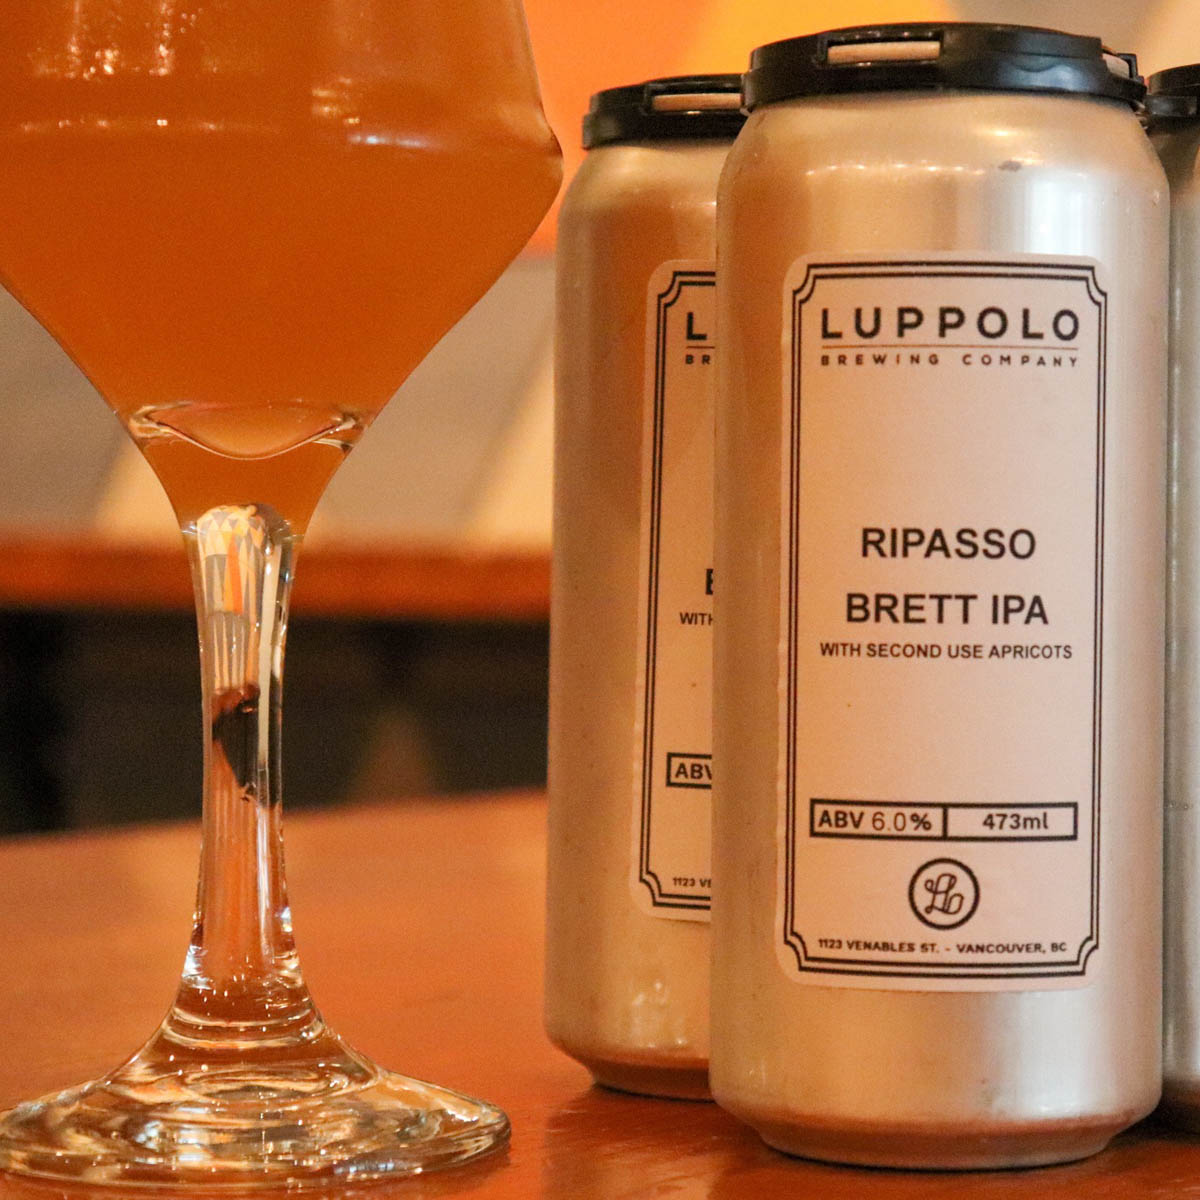 Ripasso-Brett-IPA-with-Second-Use-Apricots-Luppolo-Brewing-Company